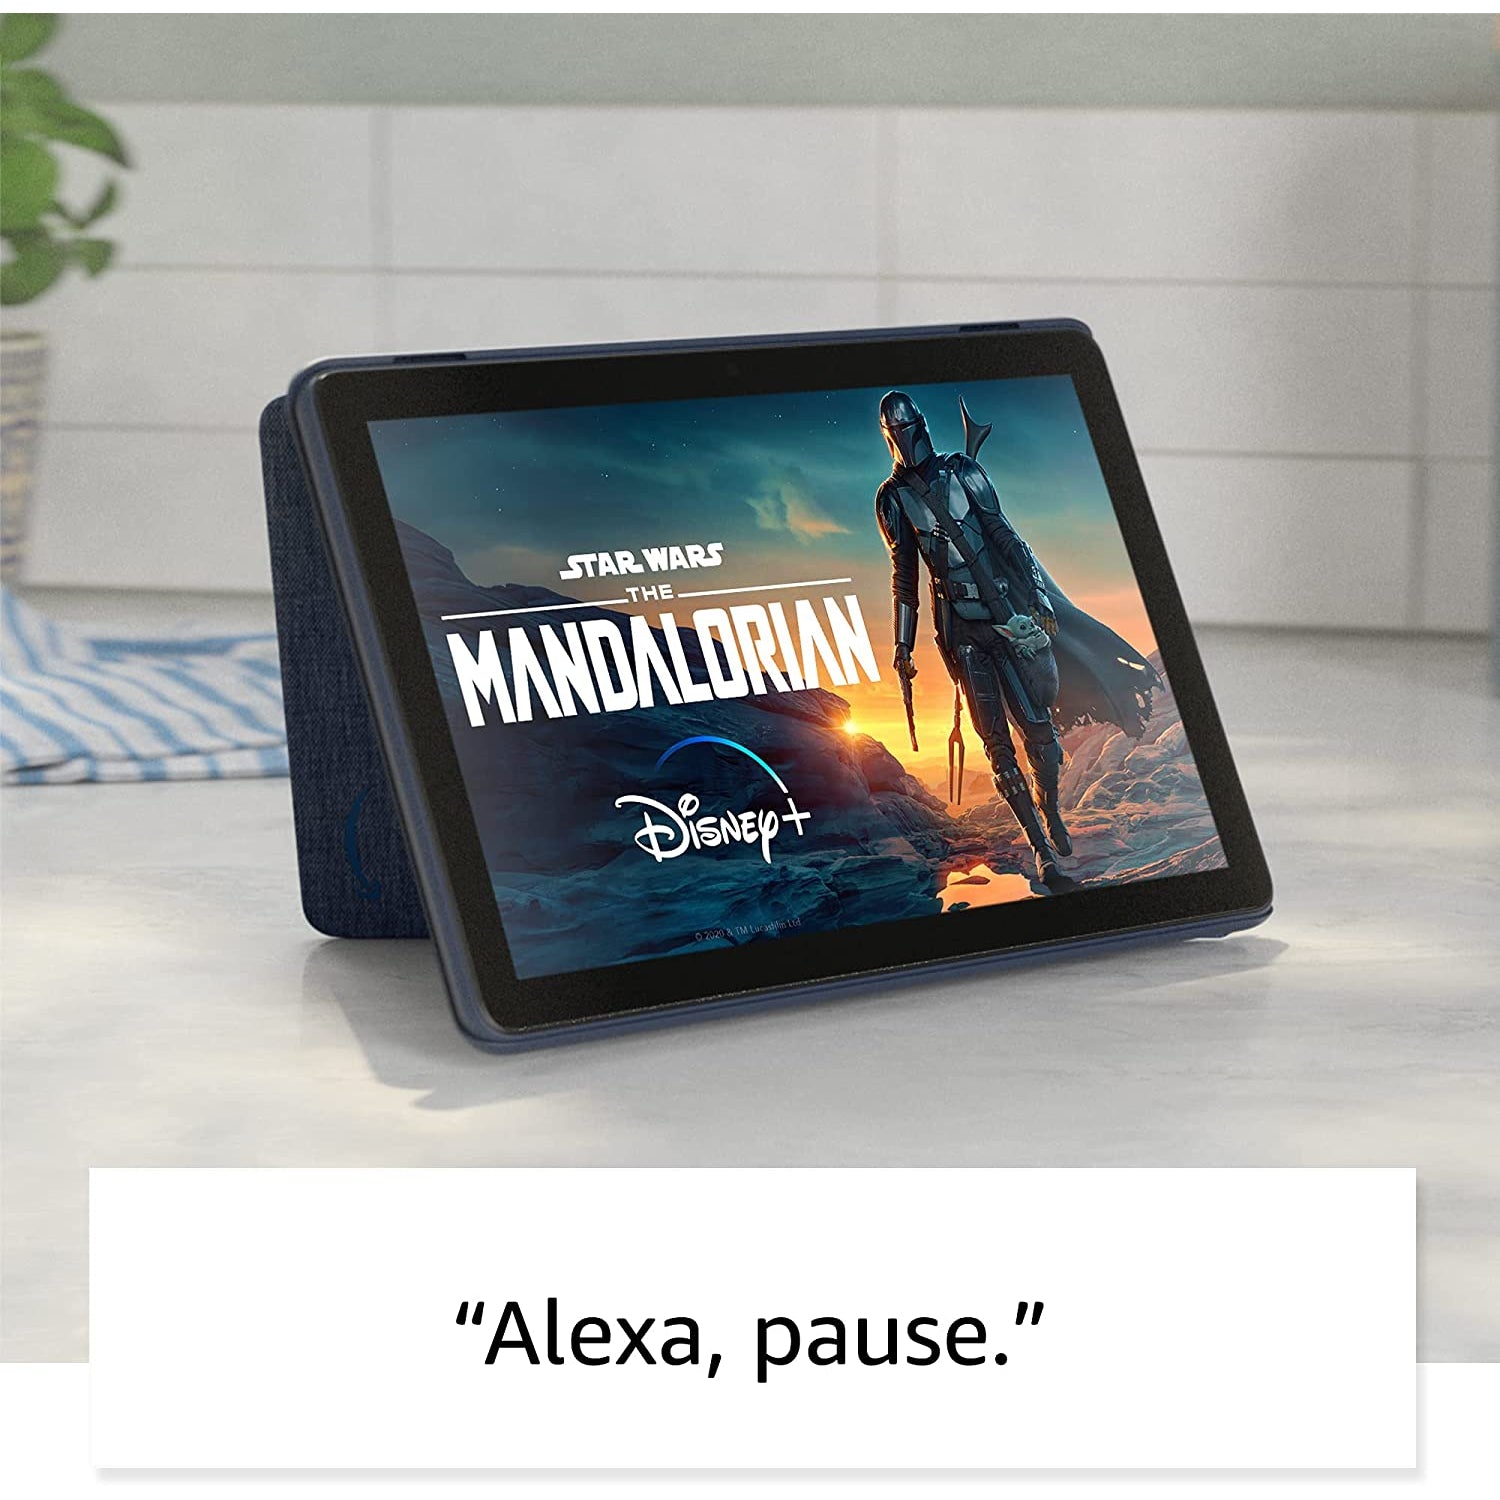 Amazon Fire HD 10 Tablet 32GB 10.1 Inch Display - Green - Refurbished Pristine